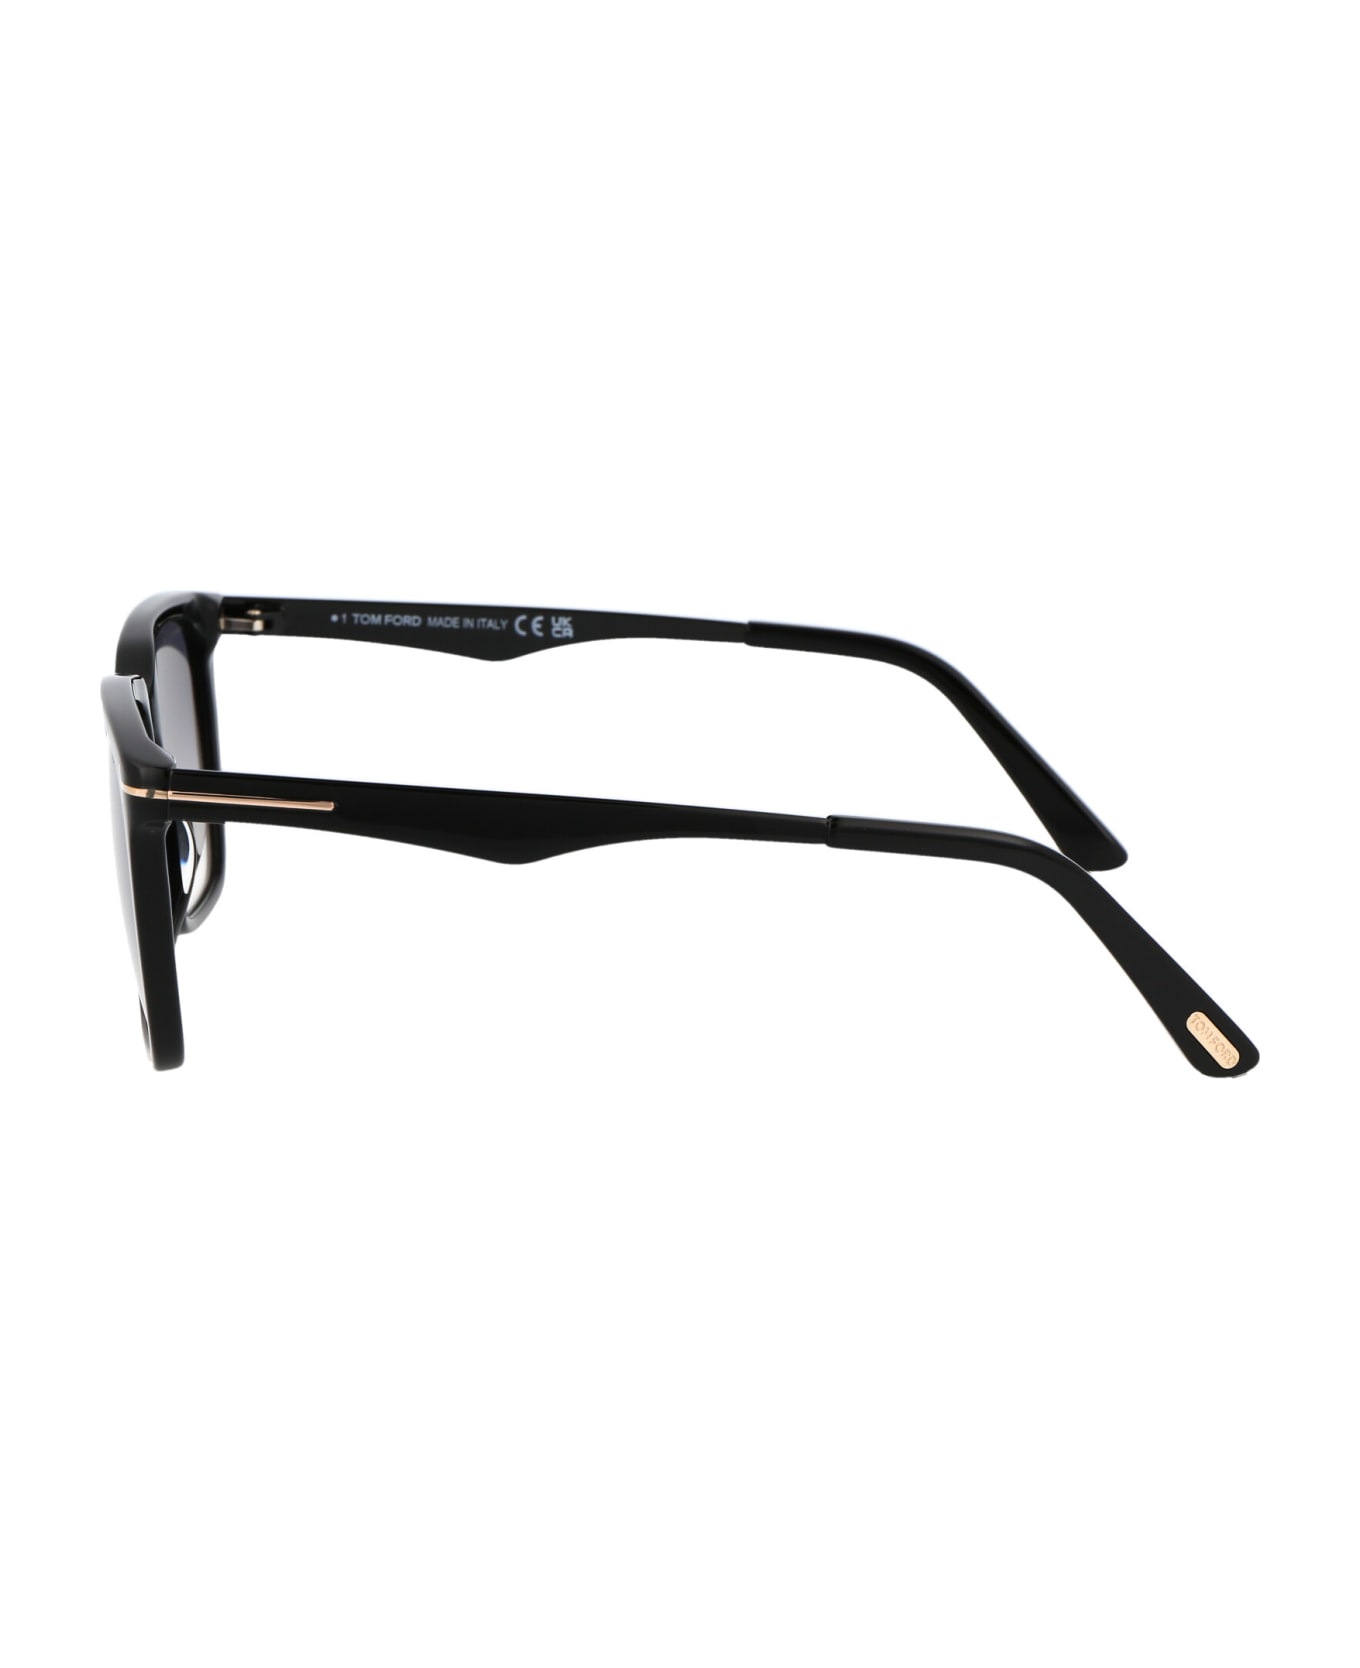 Tom Ford Eyewear Garrett Sunglasses - 01B Nero Lucido / Fumo Grad